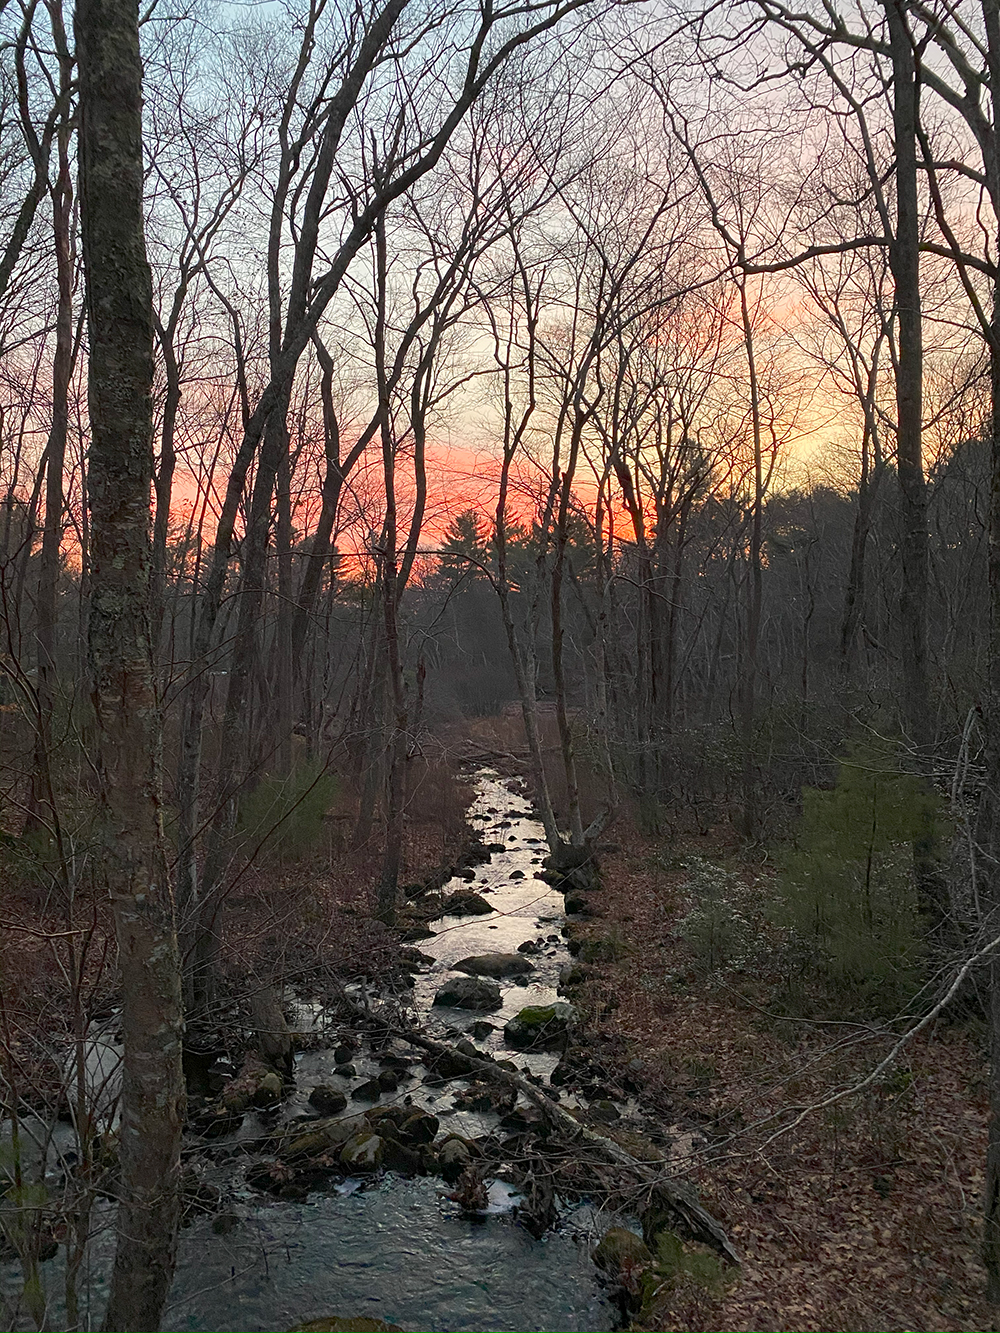 the stream at sunset